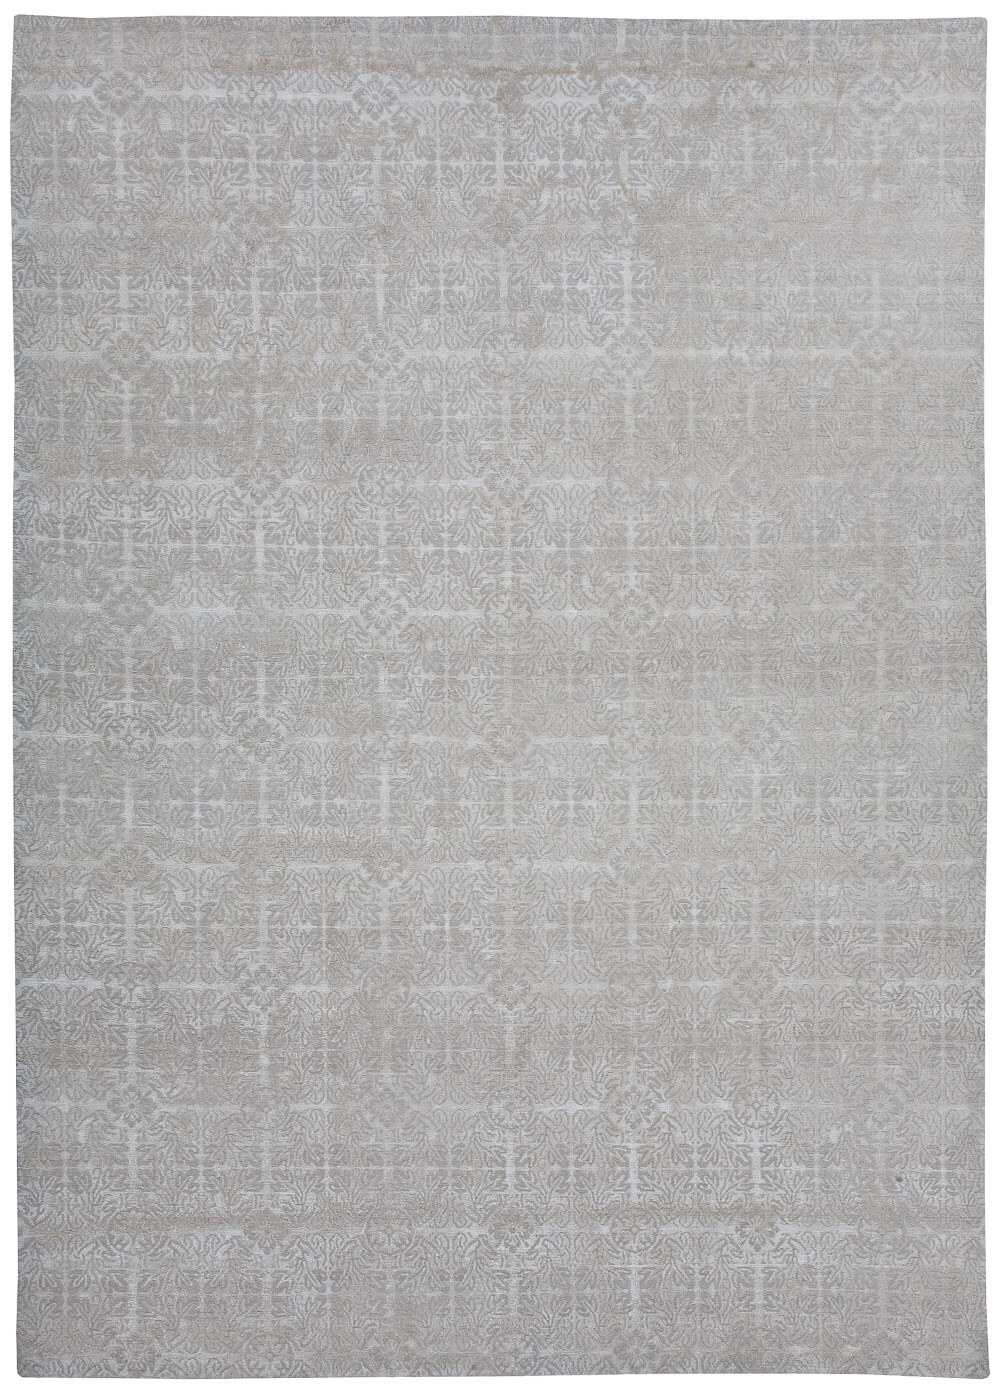 Bologna Grey Hand-woven Luxury Rug ☞ Size: 300 x 400 cm